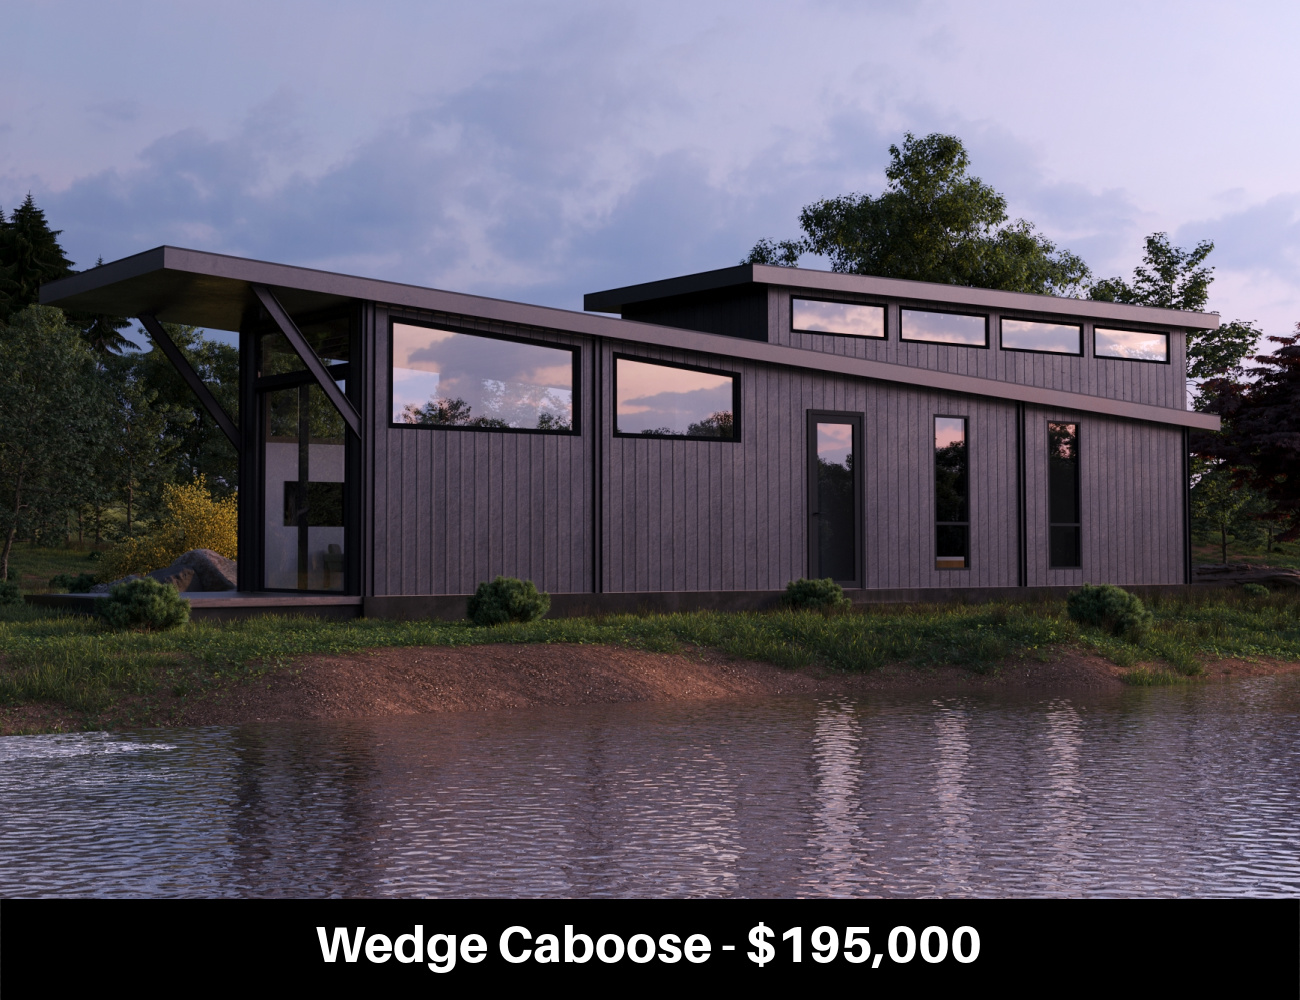 Wedge Caboose - $195,000